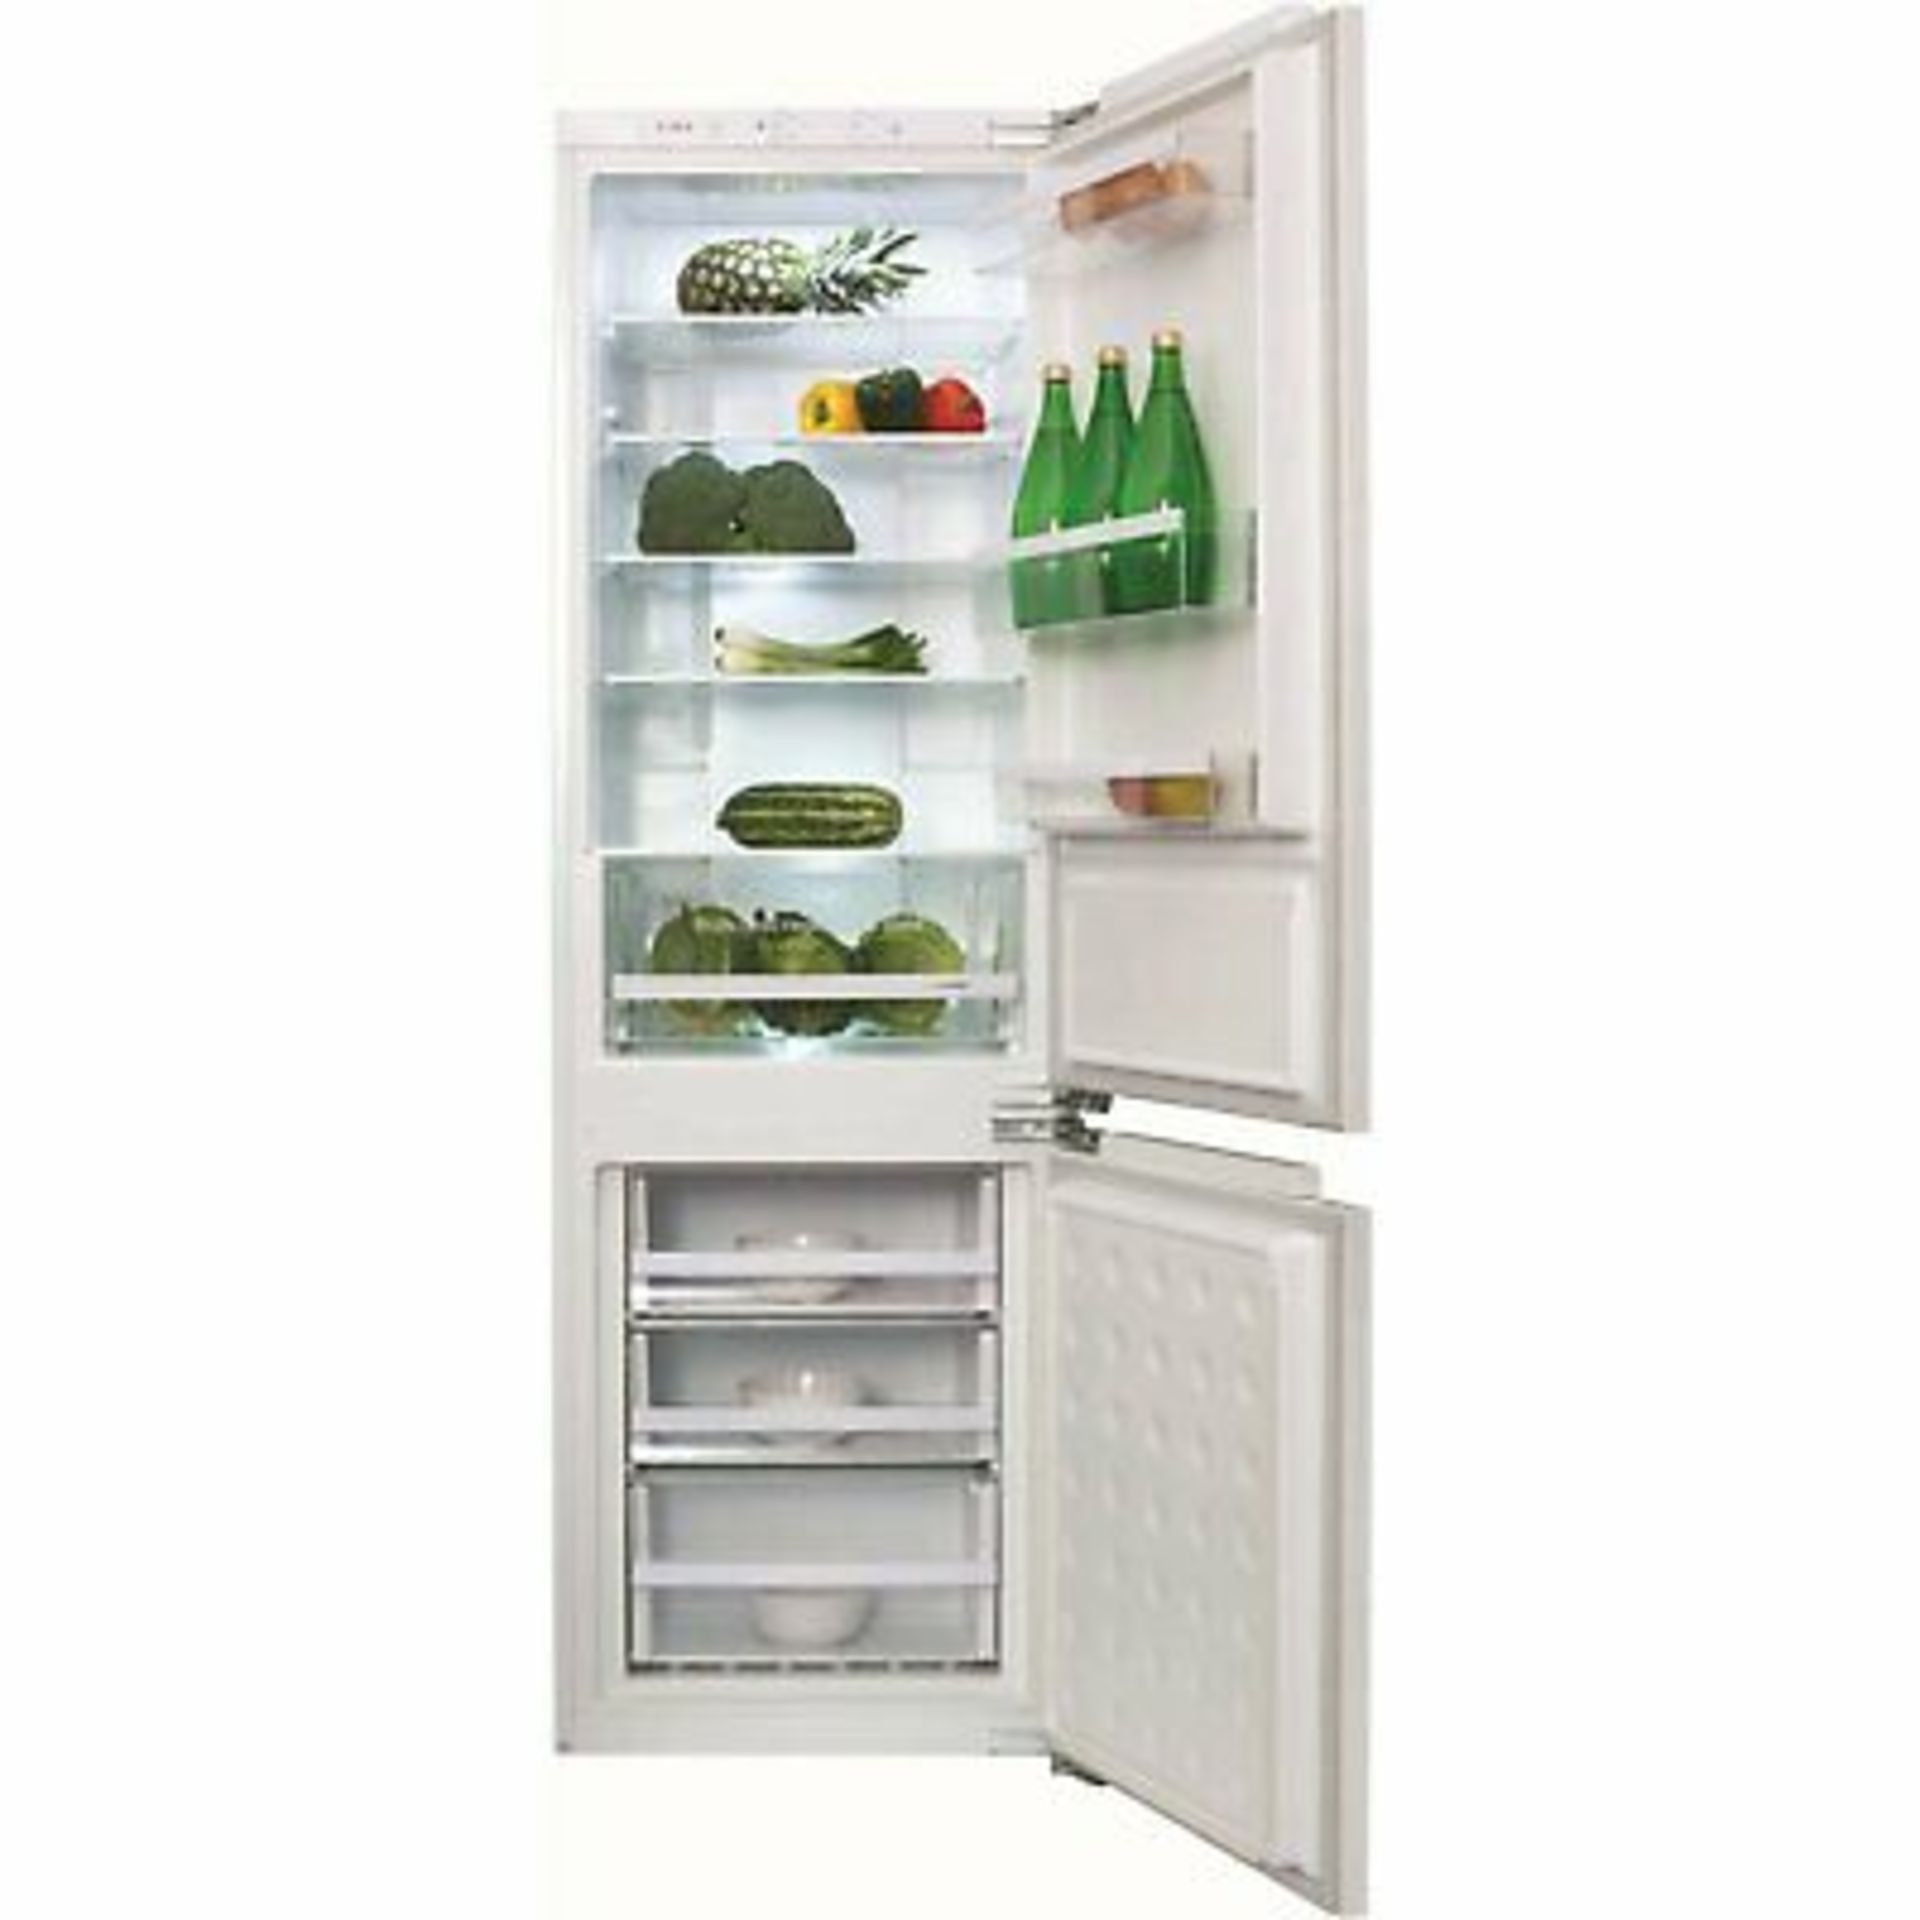 + VAT Brand New CDA FW972 Integrated 70:30 Frost Free Fridge Freezer With 251L Total Gross